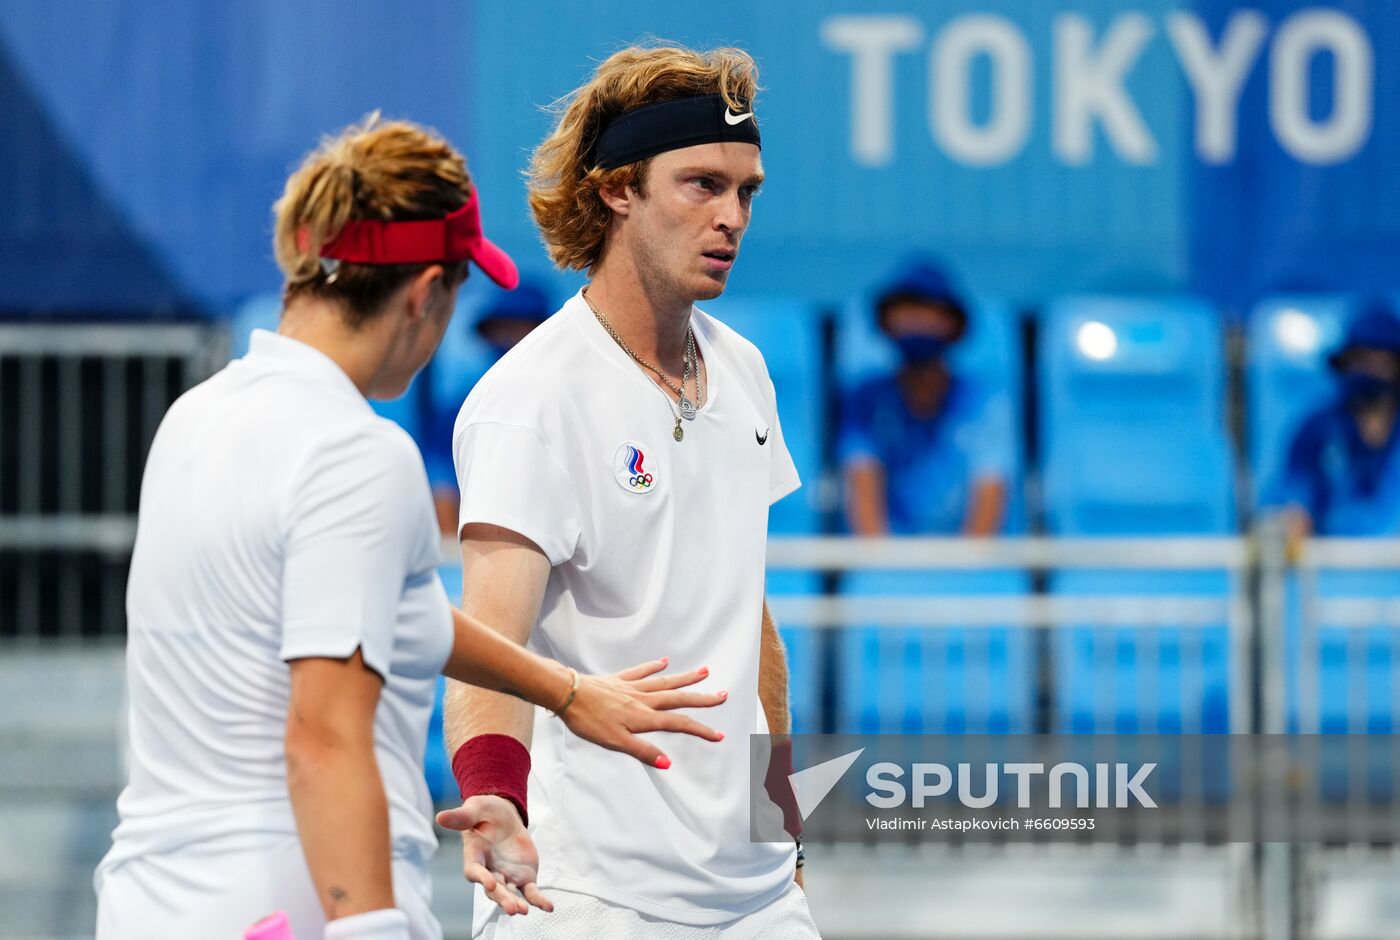 Japan Olympics 2020 Tennis Mixed Jurak/Dodig - Pavlyuchenkova/Rublev